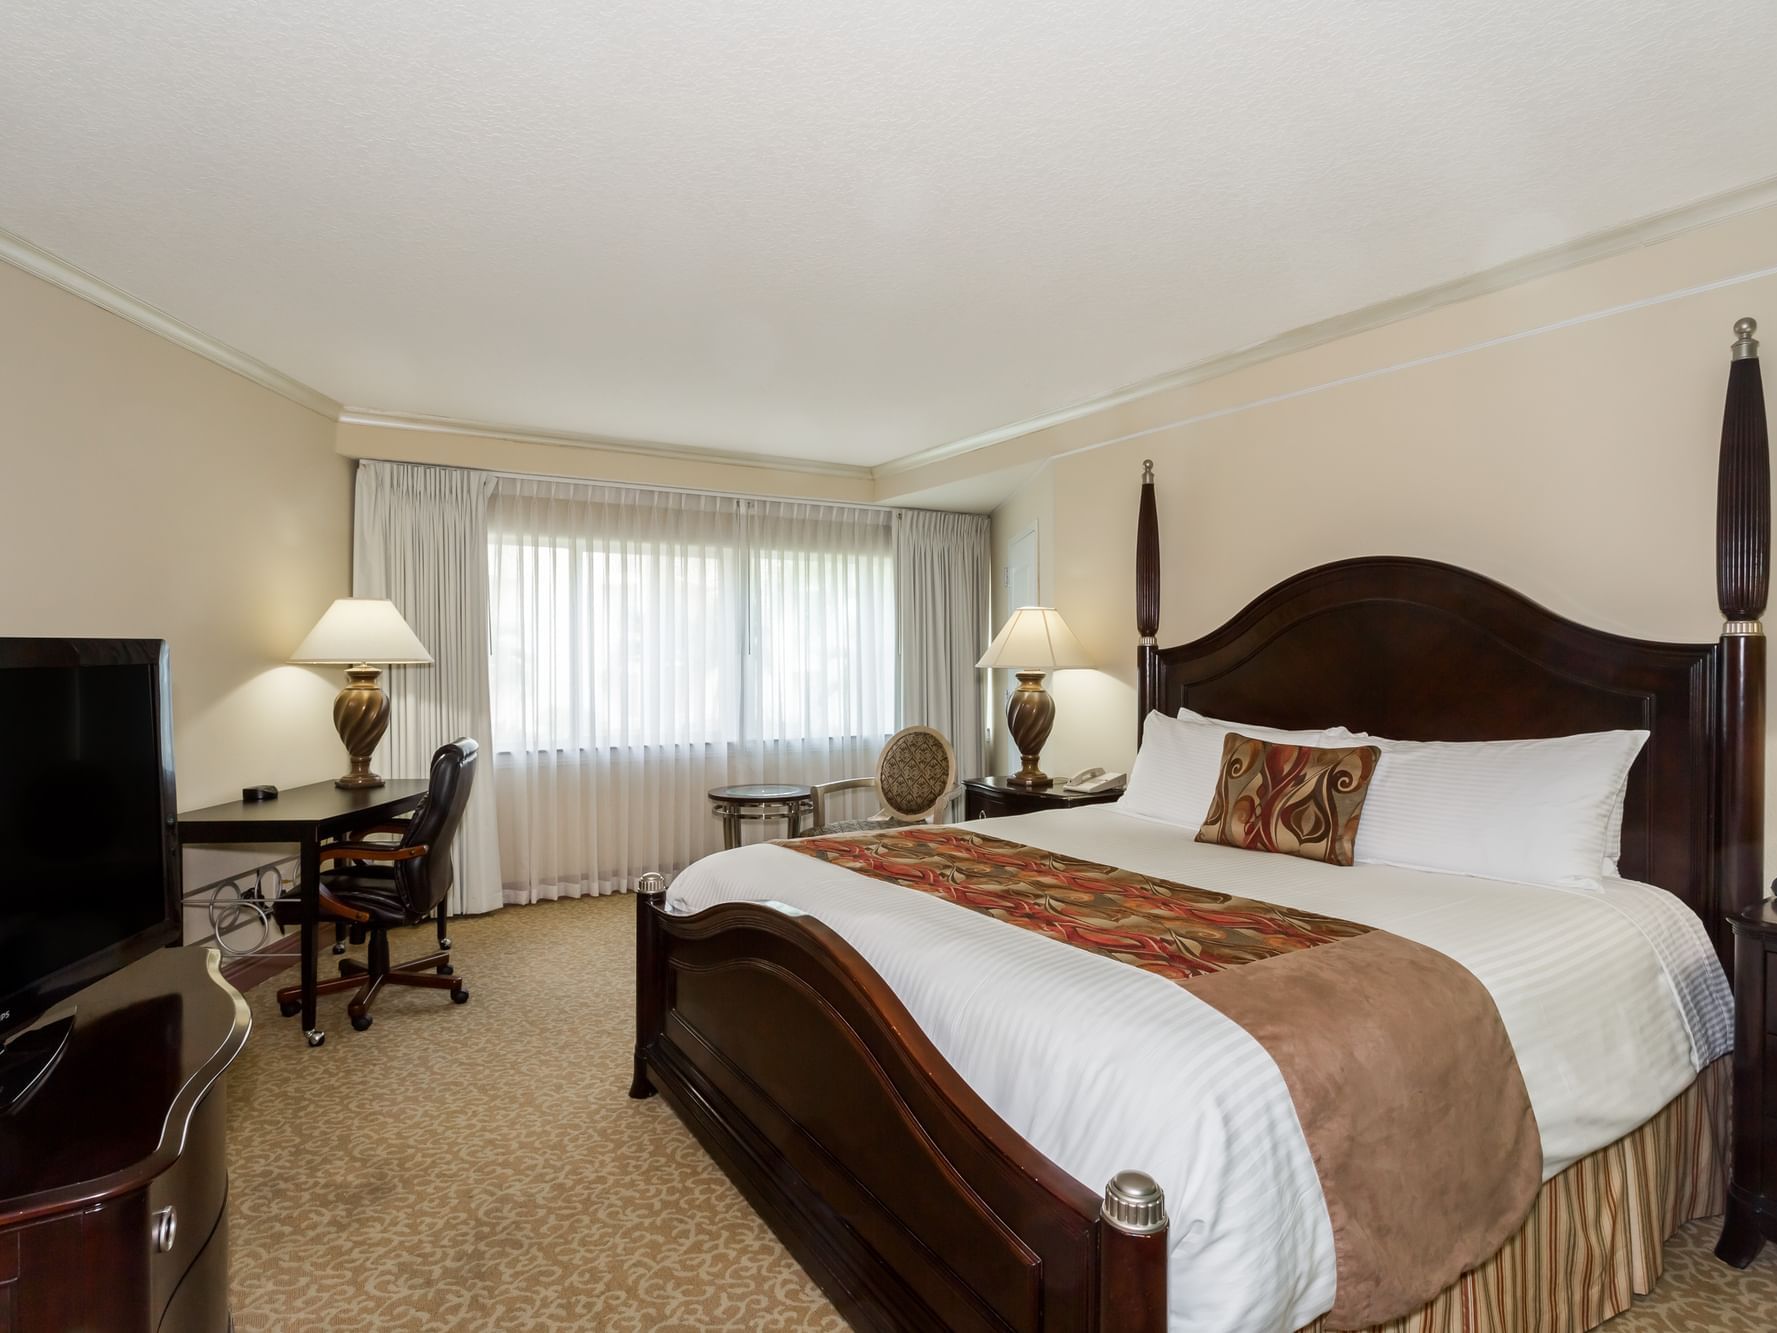 King bed & TV in bedroom at Safety Harbor & Resort